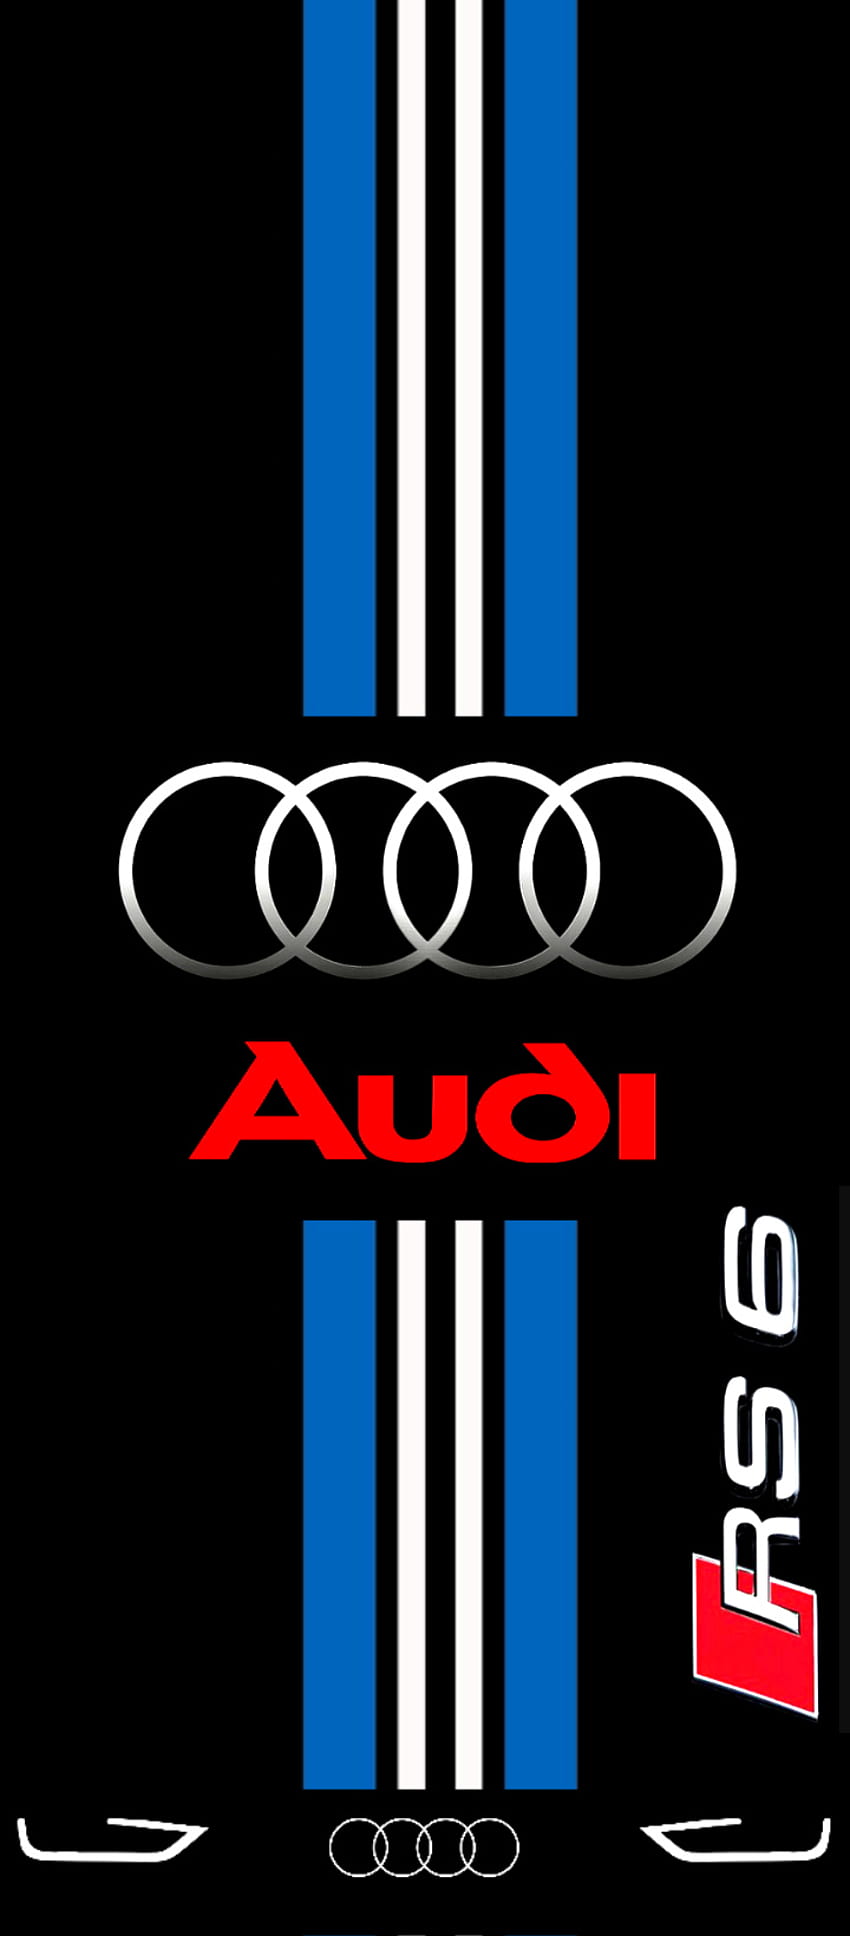 Audi-Wallpaper iPhone | Iphone wallpaper, Luxury cars audi, Black audi